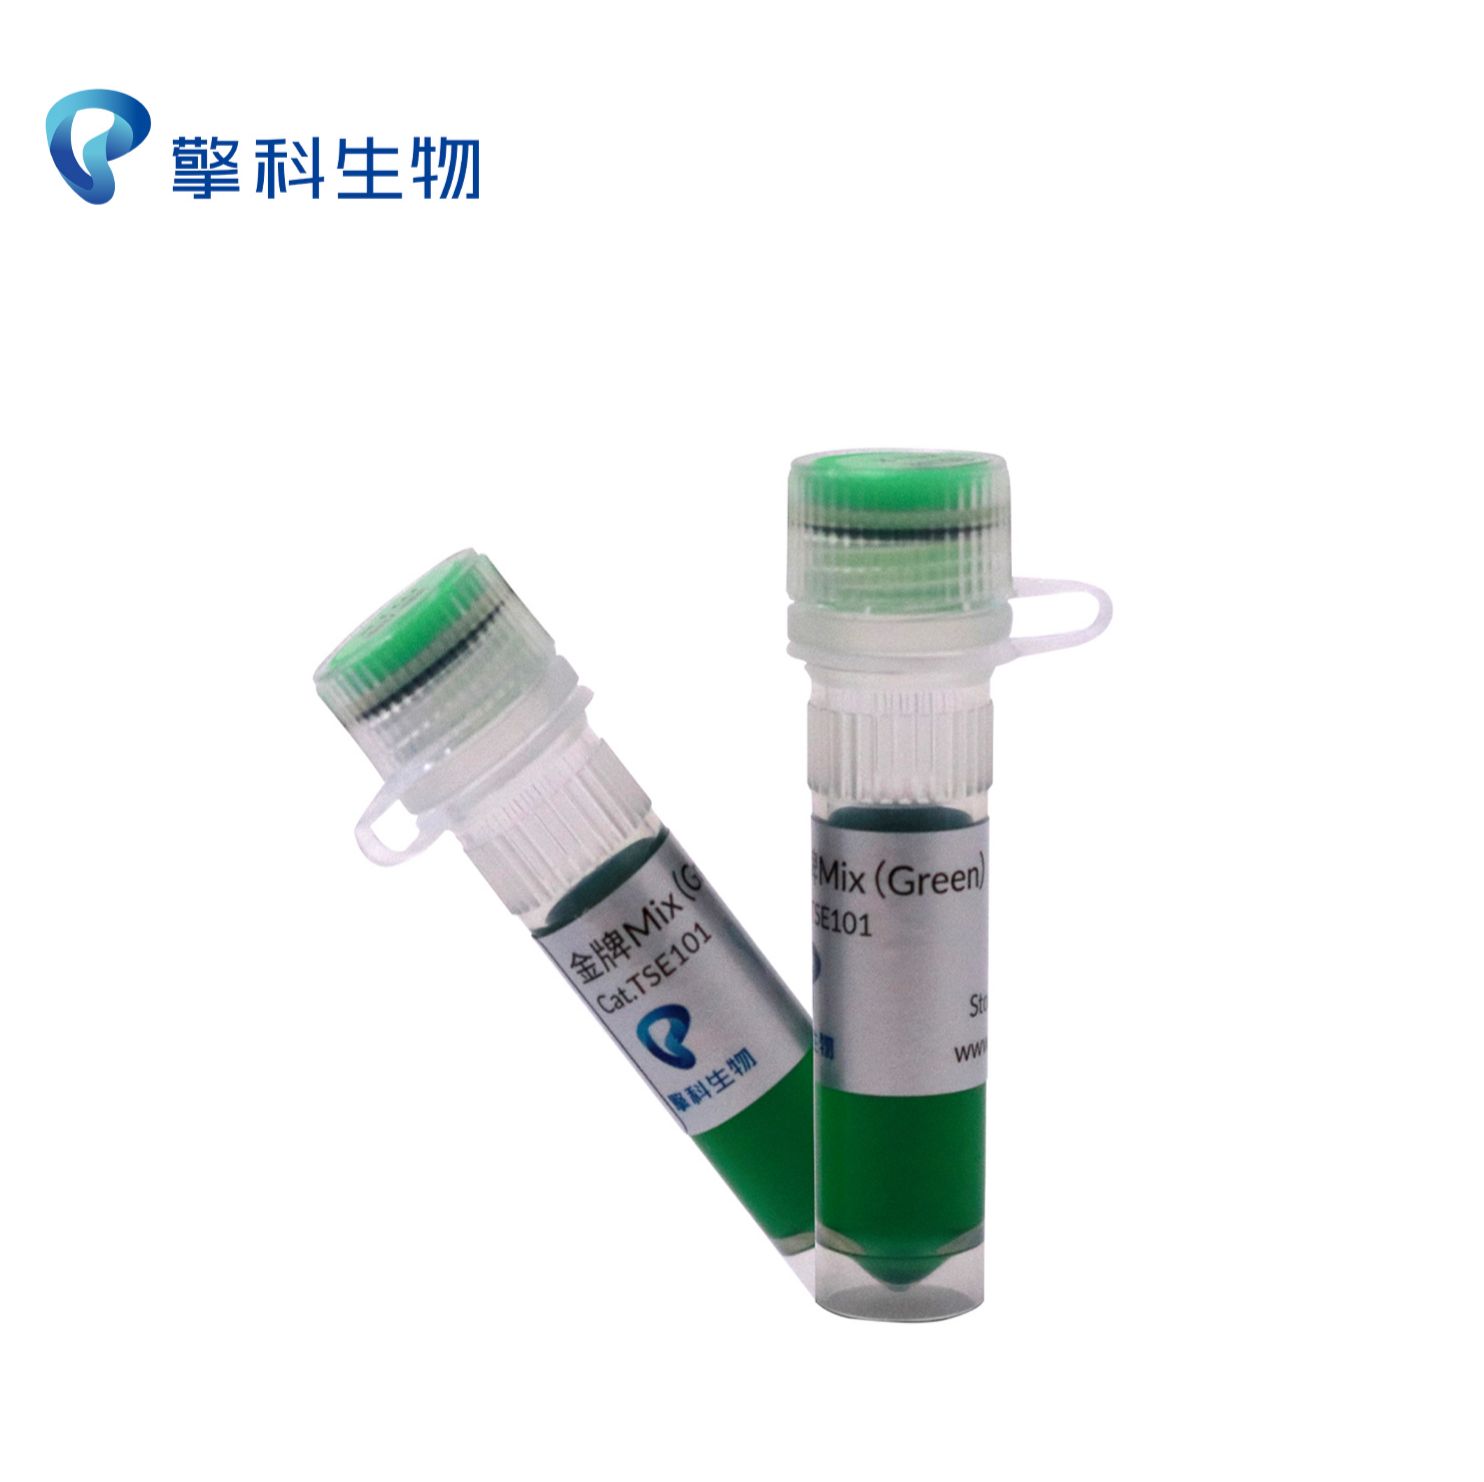 GoldenStar® T6 Super PCR Mix（1.1×）金牌 Mix（green）/PCR系列/即用型，超高保真度（Taq的30倍），极速延伸（5~10 s/kb）/擎科生物TSINGKE